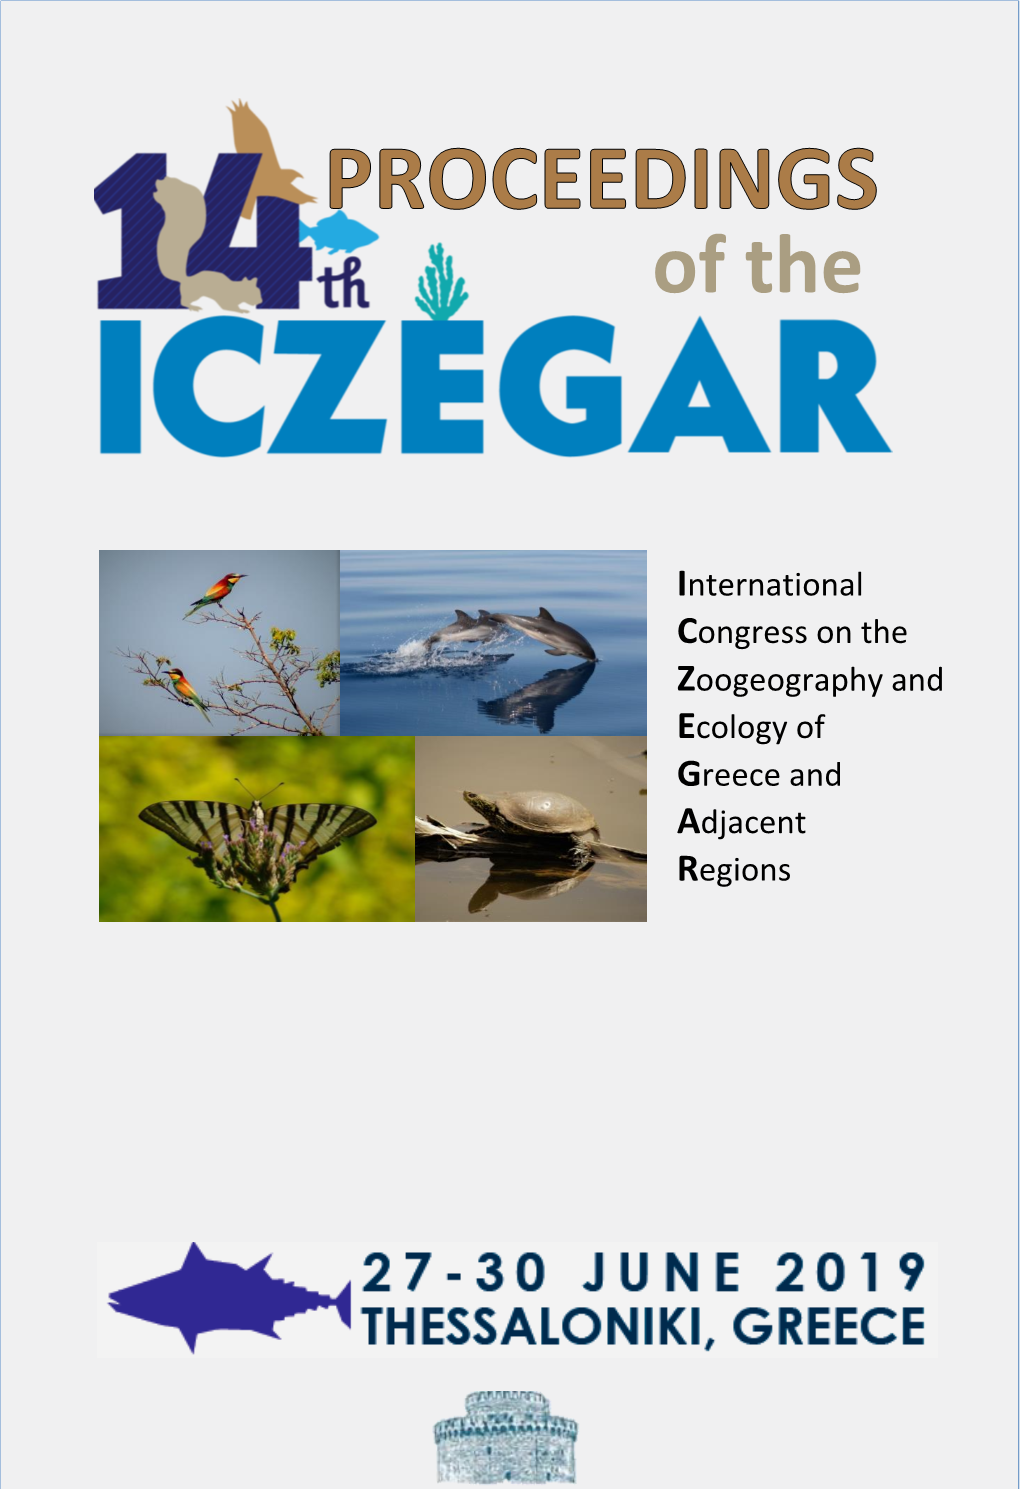 Proceedings of the 14Th ICZEGAR